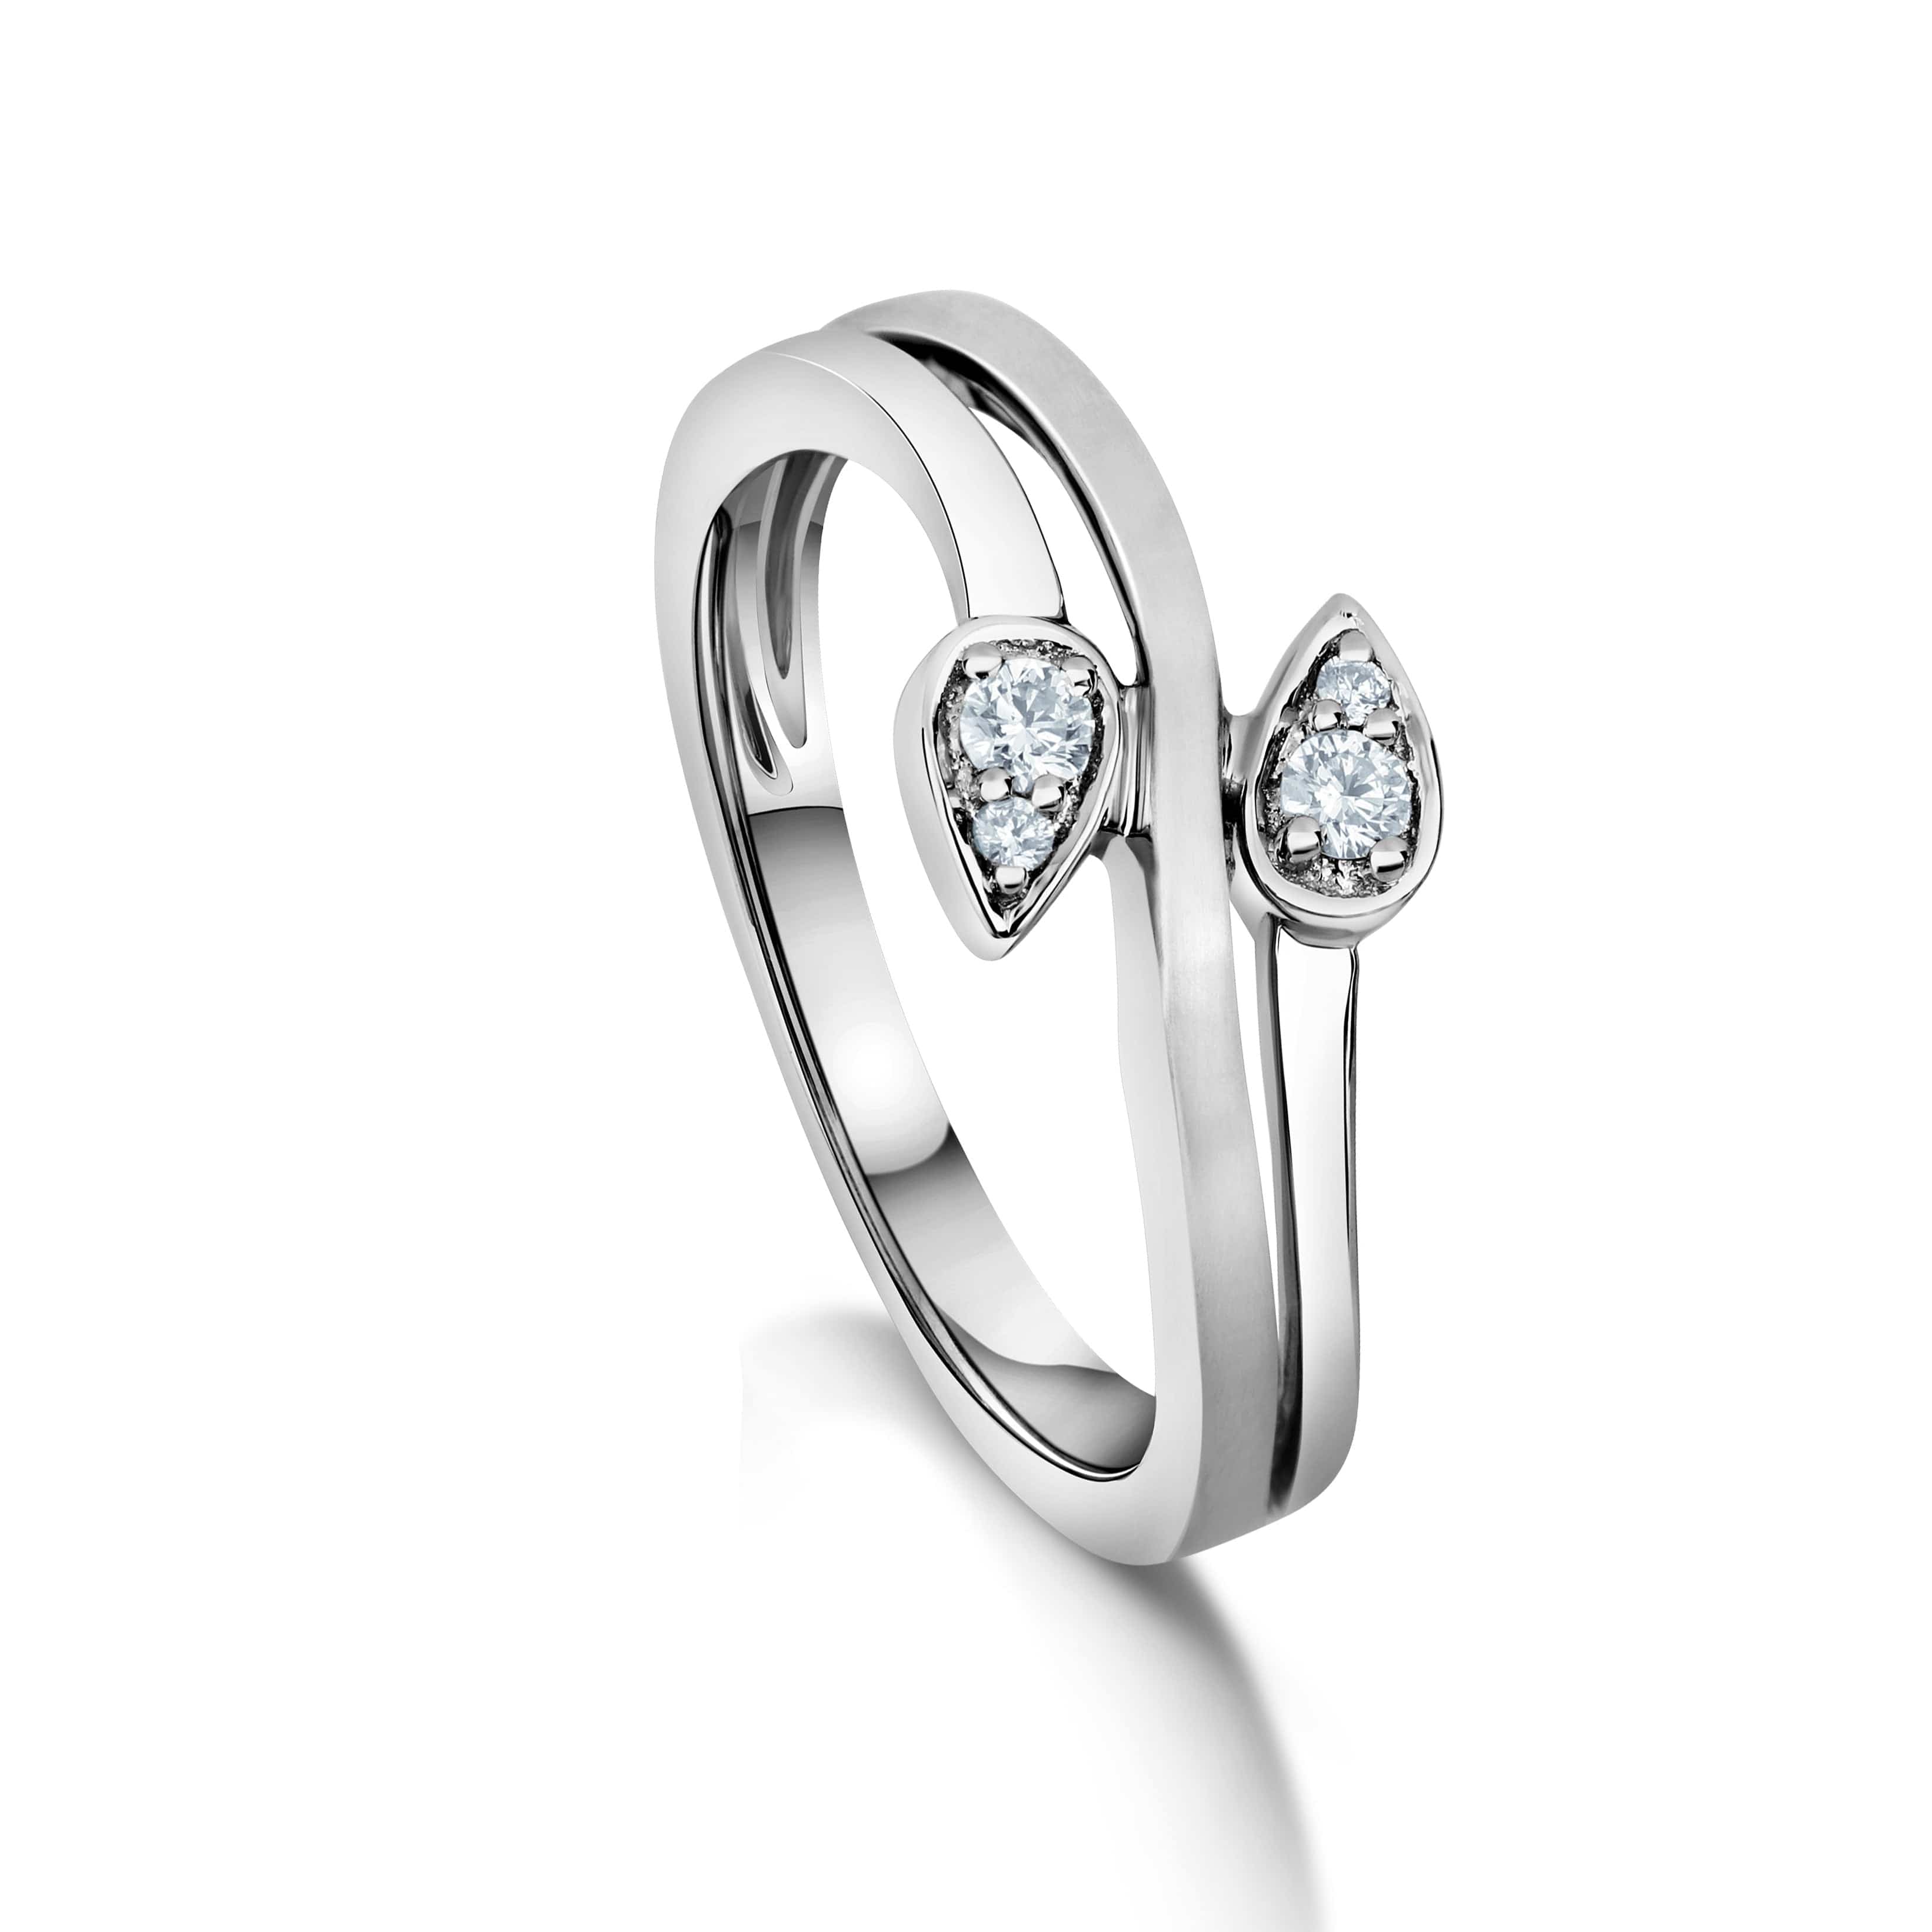 Buy 1 Carat Diamond Ring Gold Ring For Women Men 100 Cent Diamond VVS1 D  Diamond Stone Original Certified By IGL Lab 1 Ct Diamond Ring Diamond Ring  22 k Gold Ring